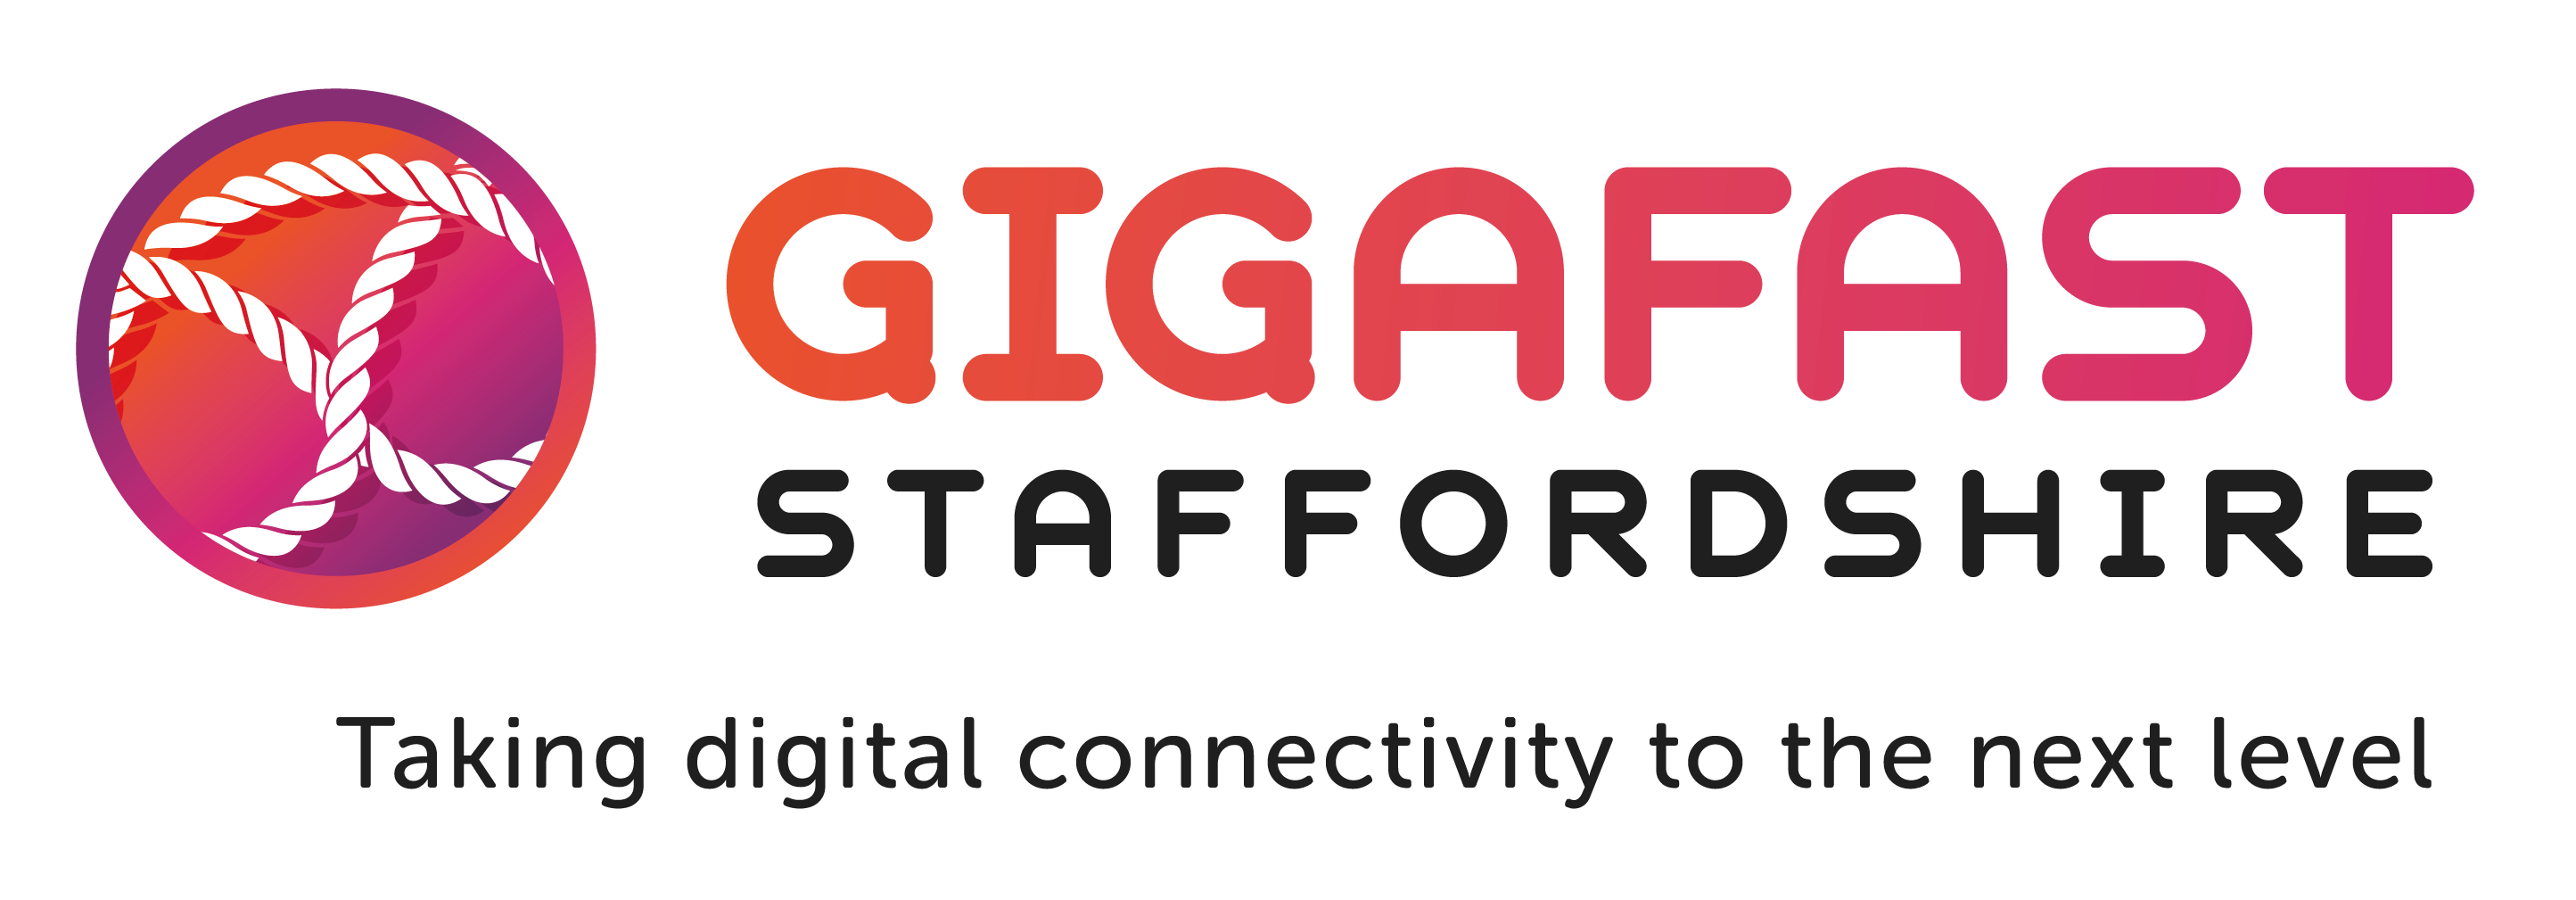 Gigafast Stafforshire logo